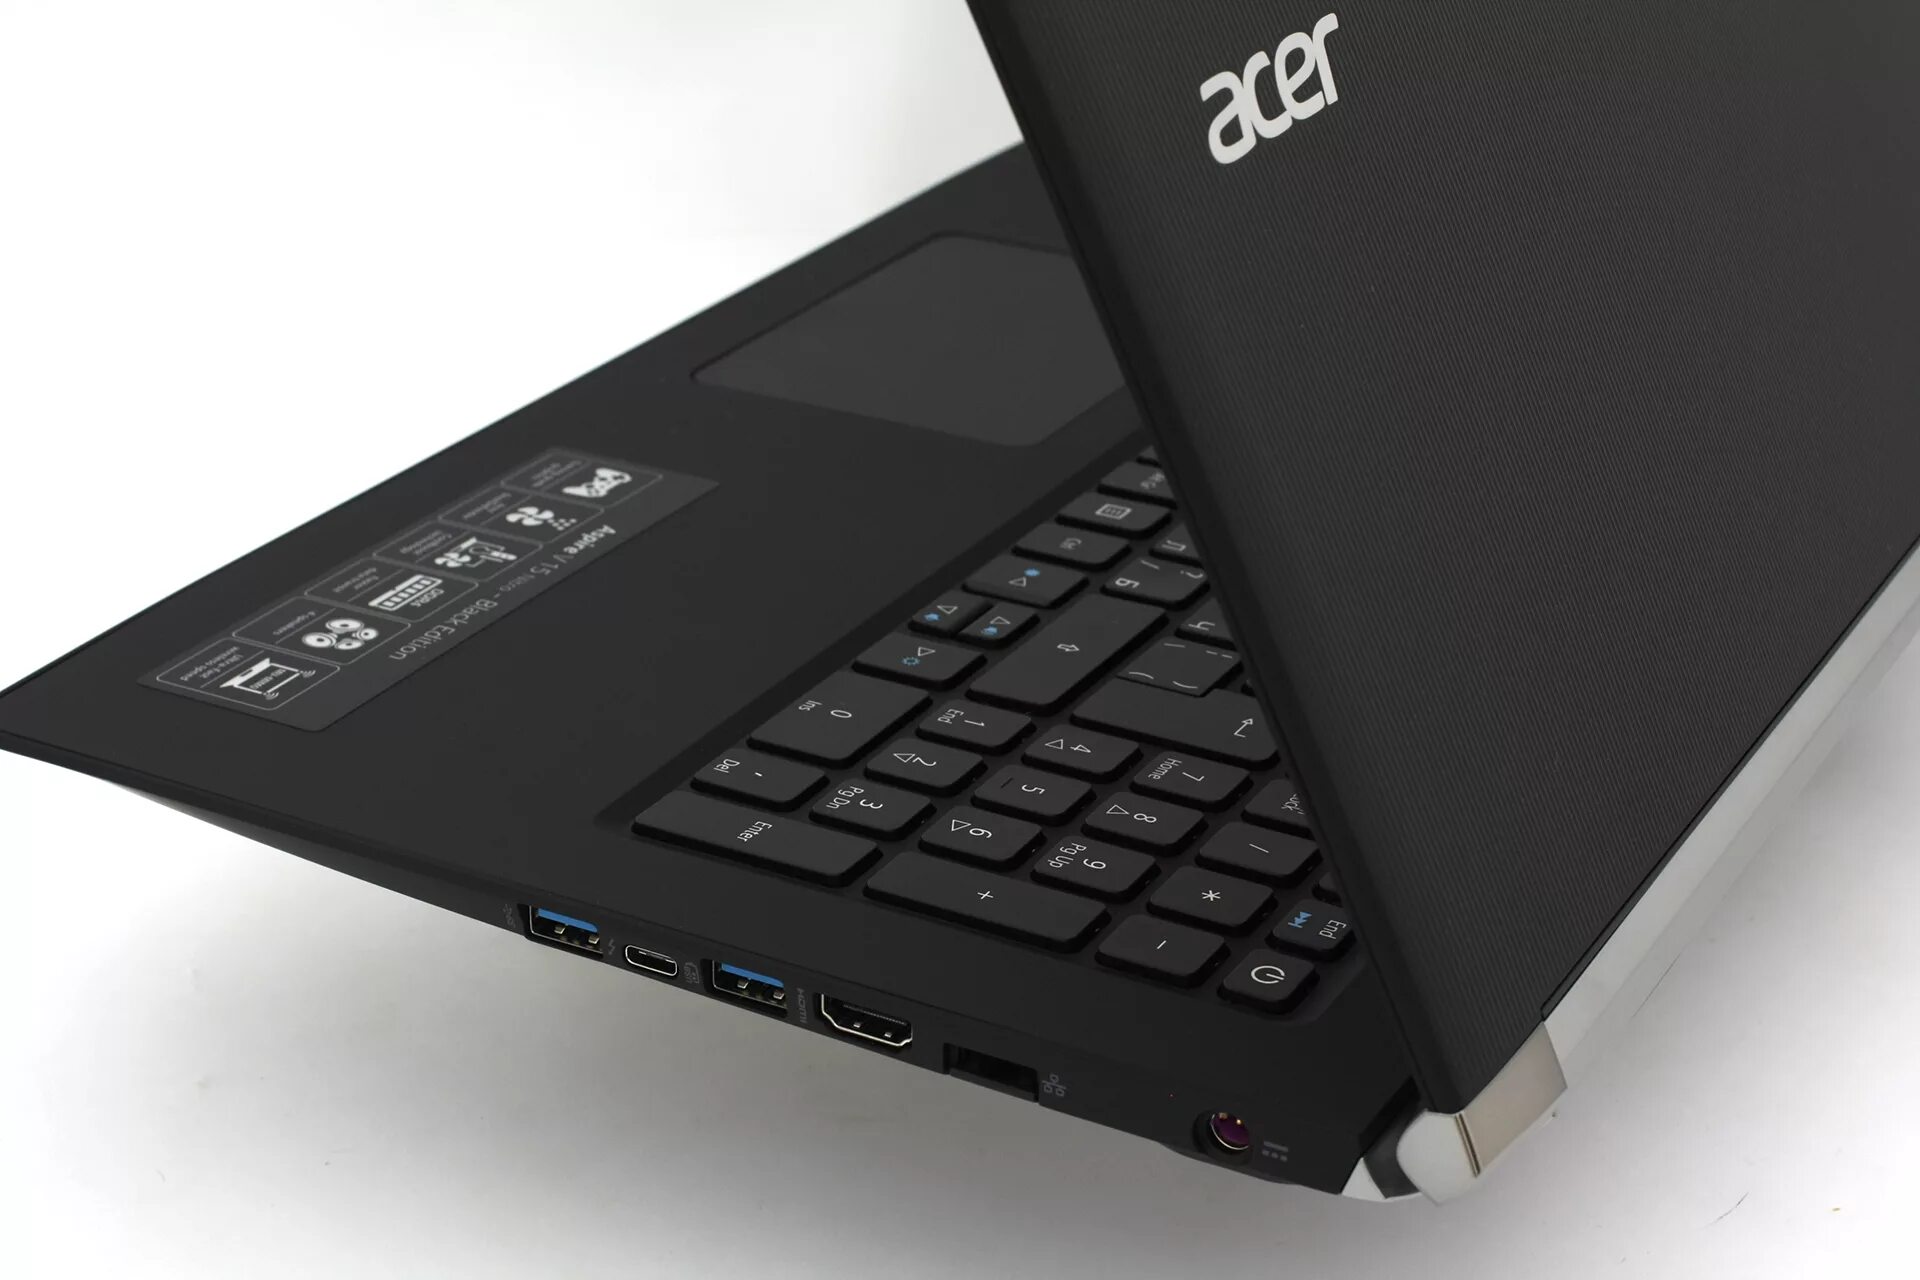 Acer Aspire v15 Nitro Black Edition. Acer Nitro 15. Acer v Nitro 15 Black Edition. Acer Nitro 5 v15.